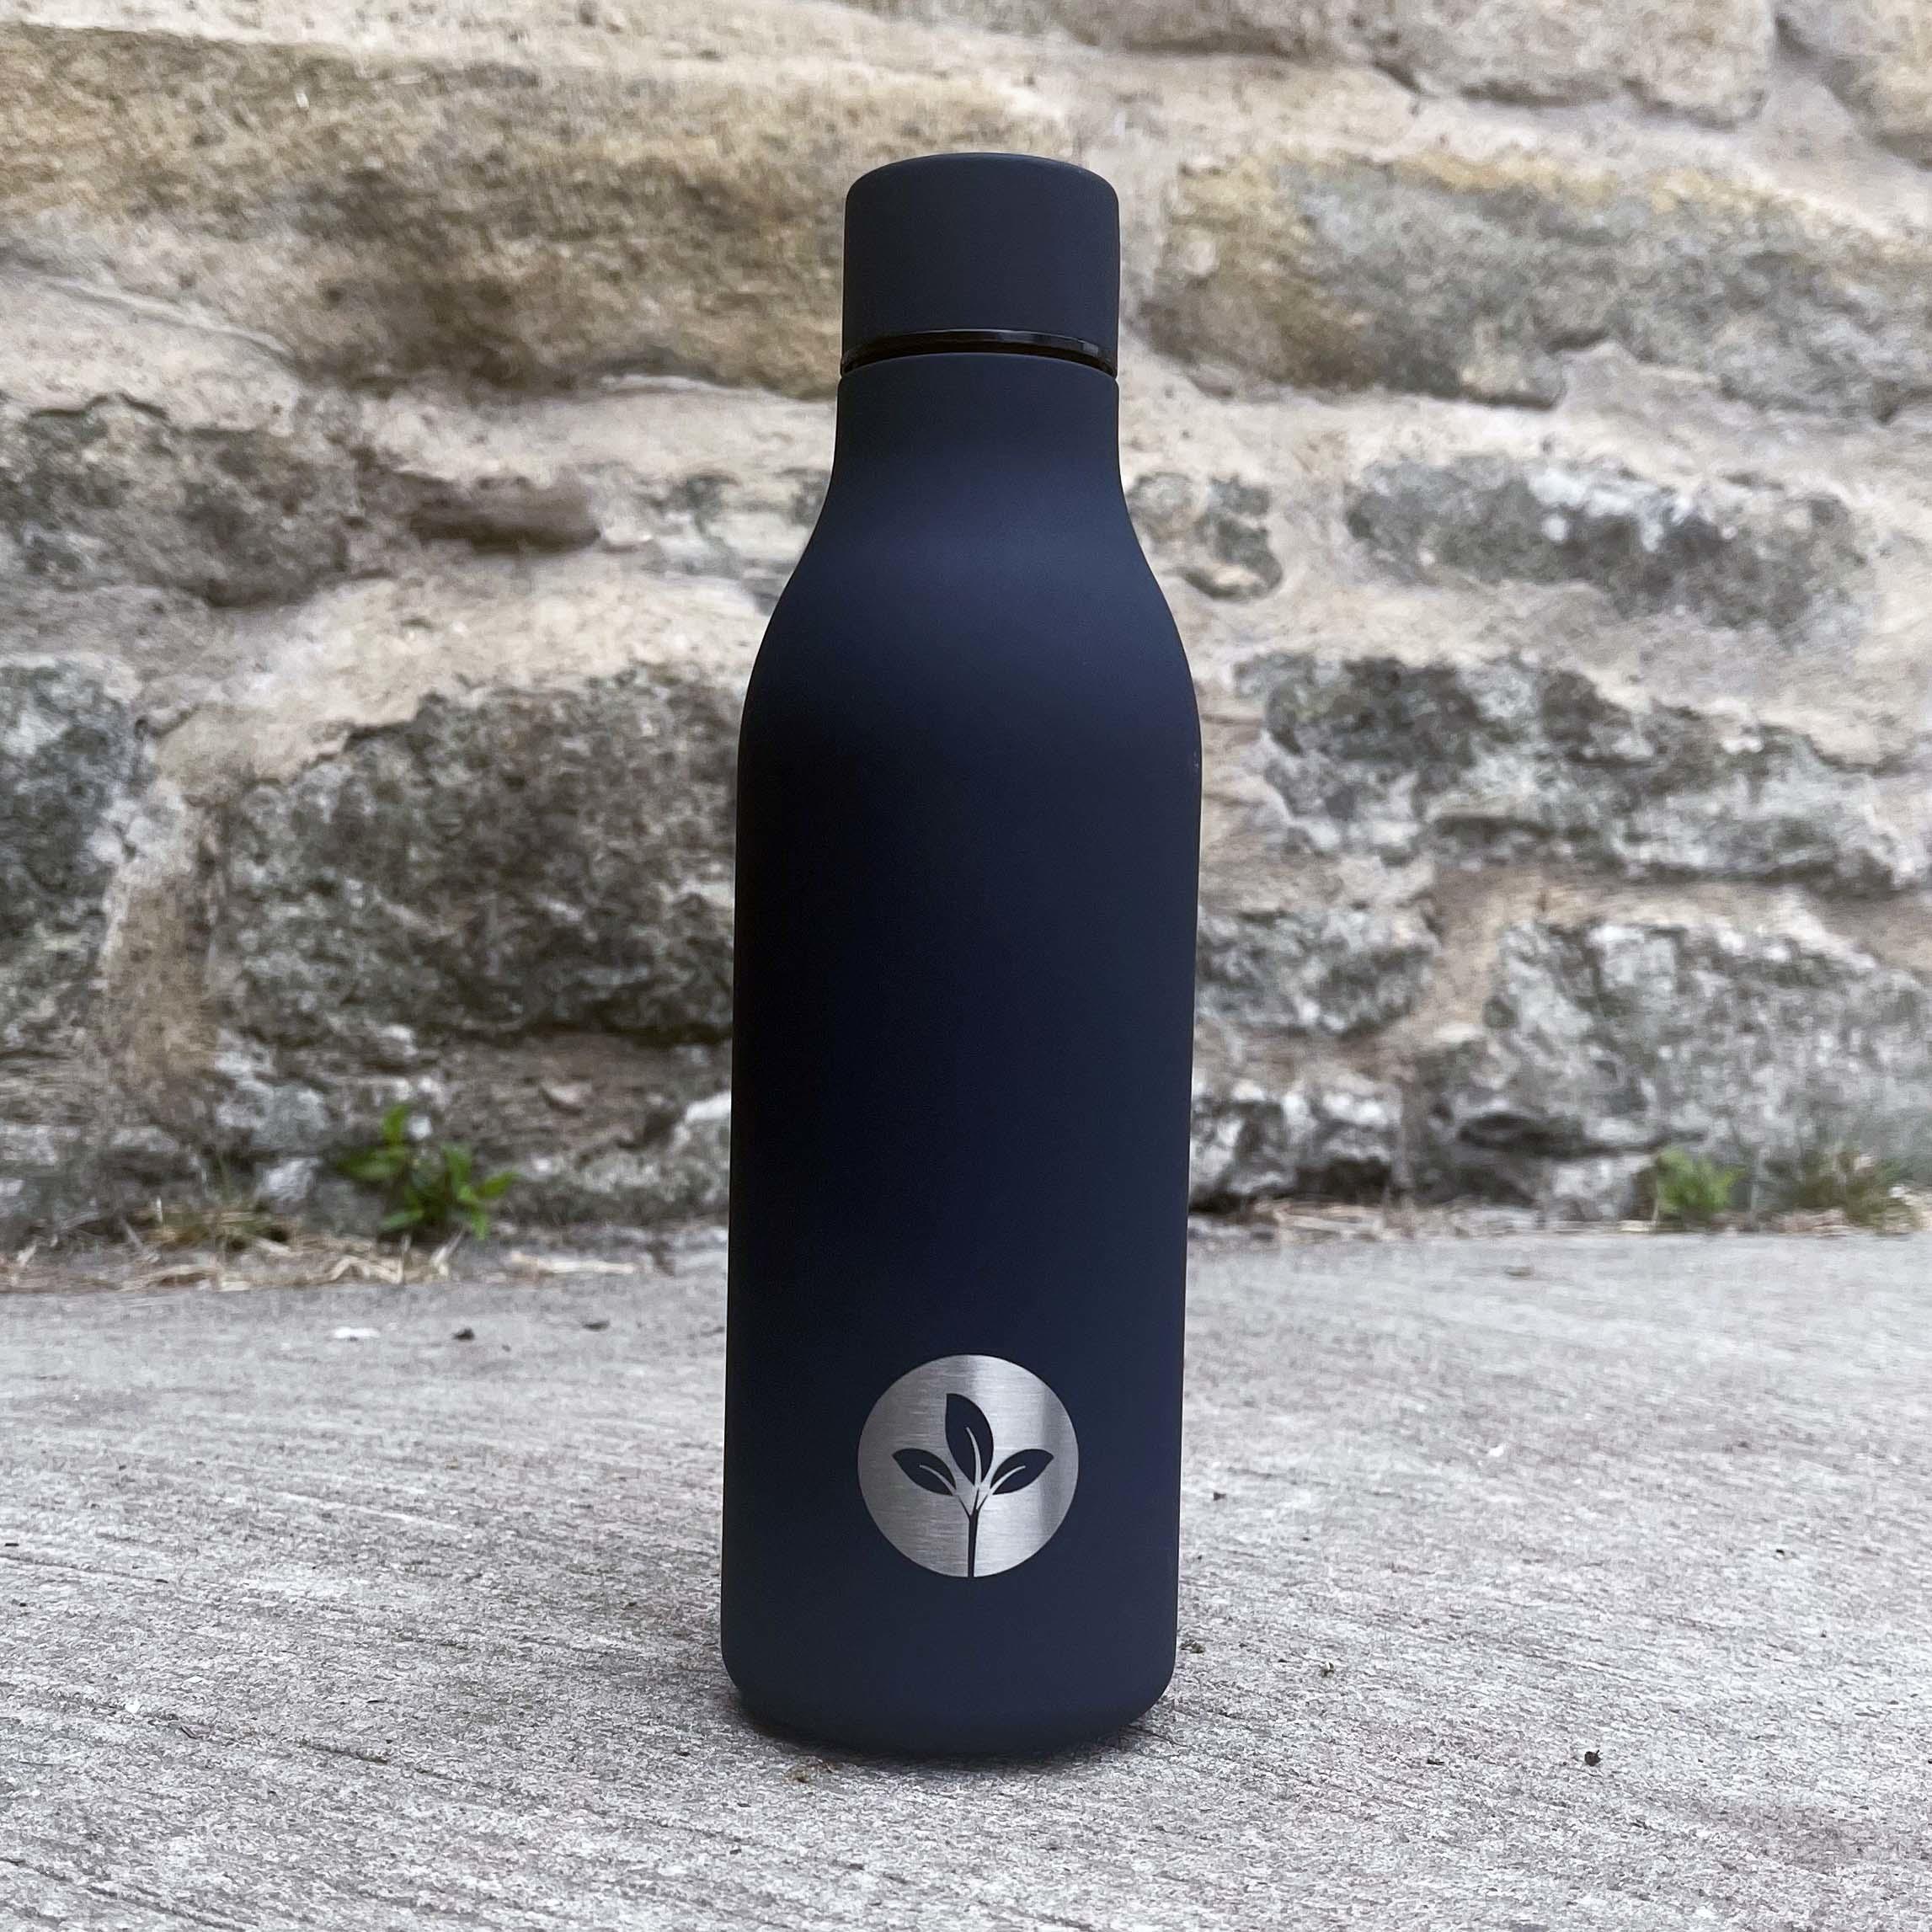 Cherish Planet Soft-Touch Stainless Steel Water Bottle 550ml Black